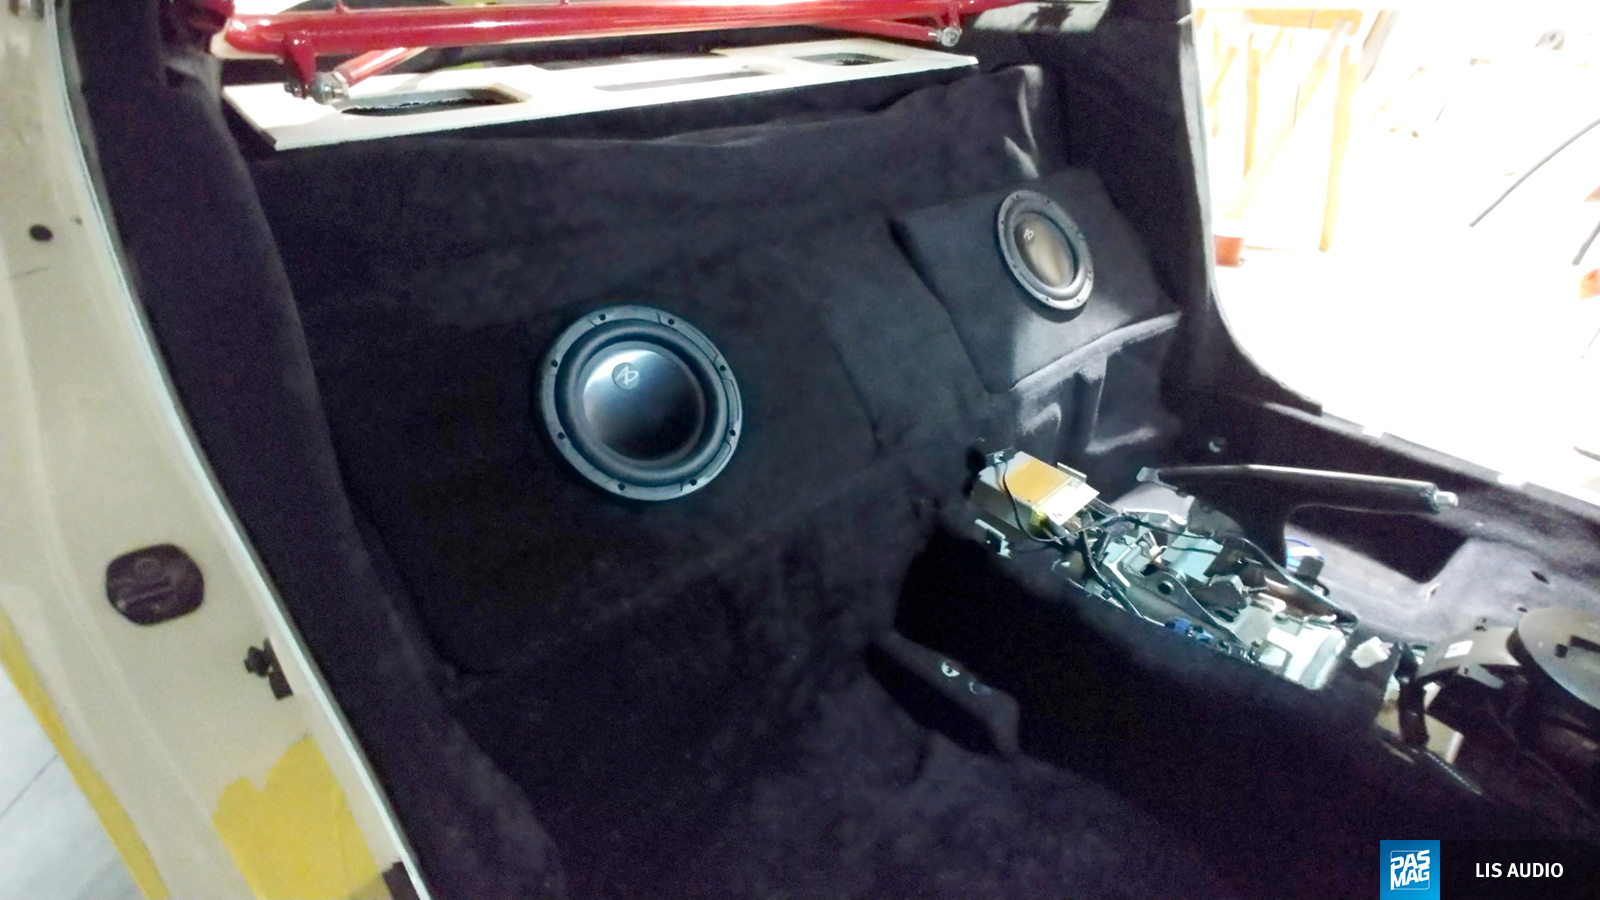 05 lis audio show ready car audio system subwoofer boxes pasmag